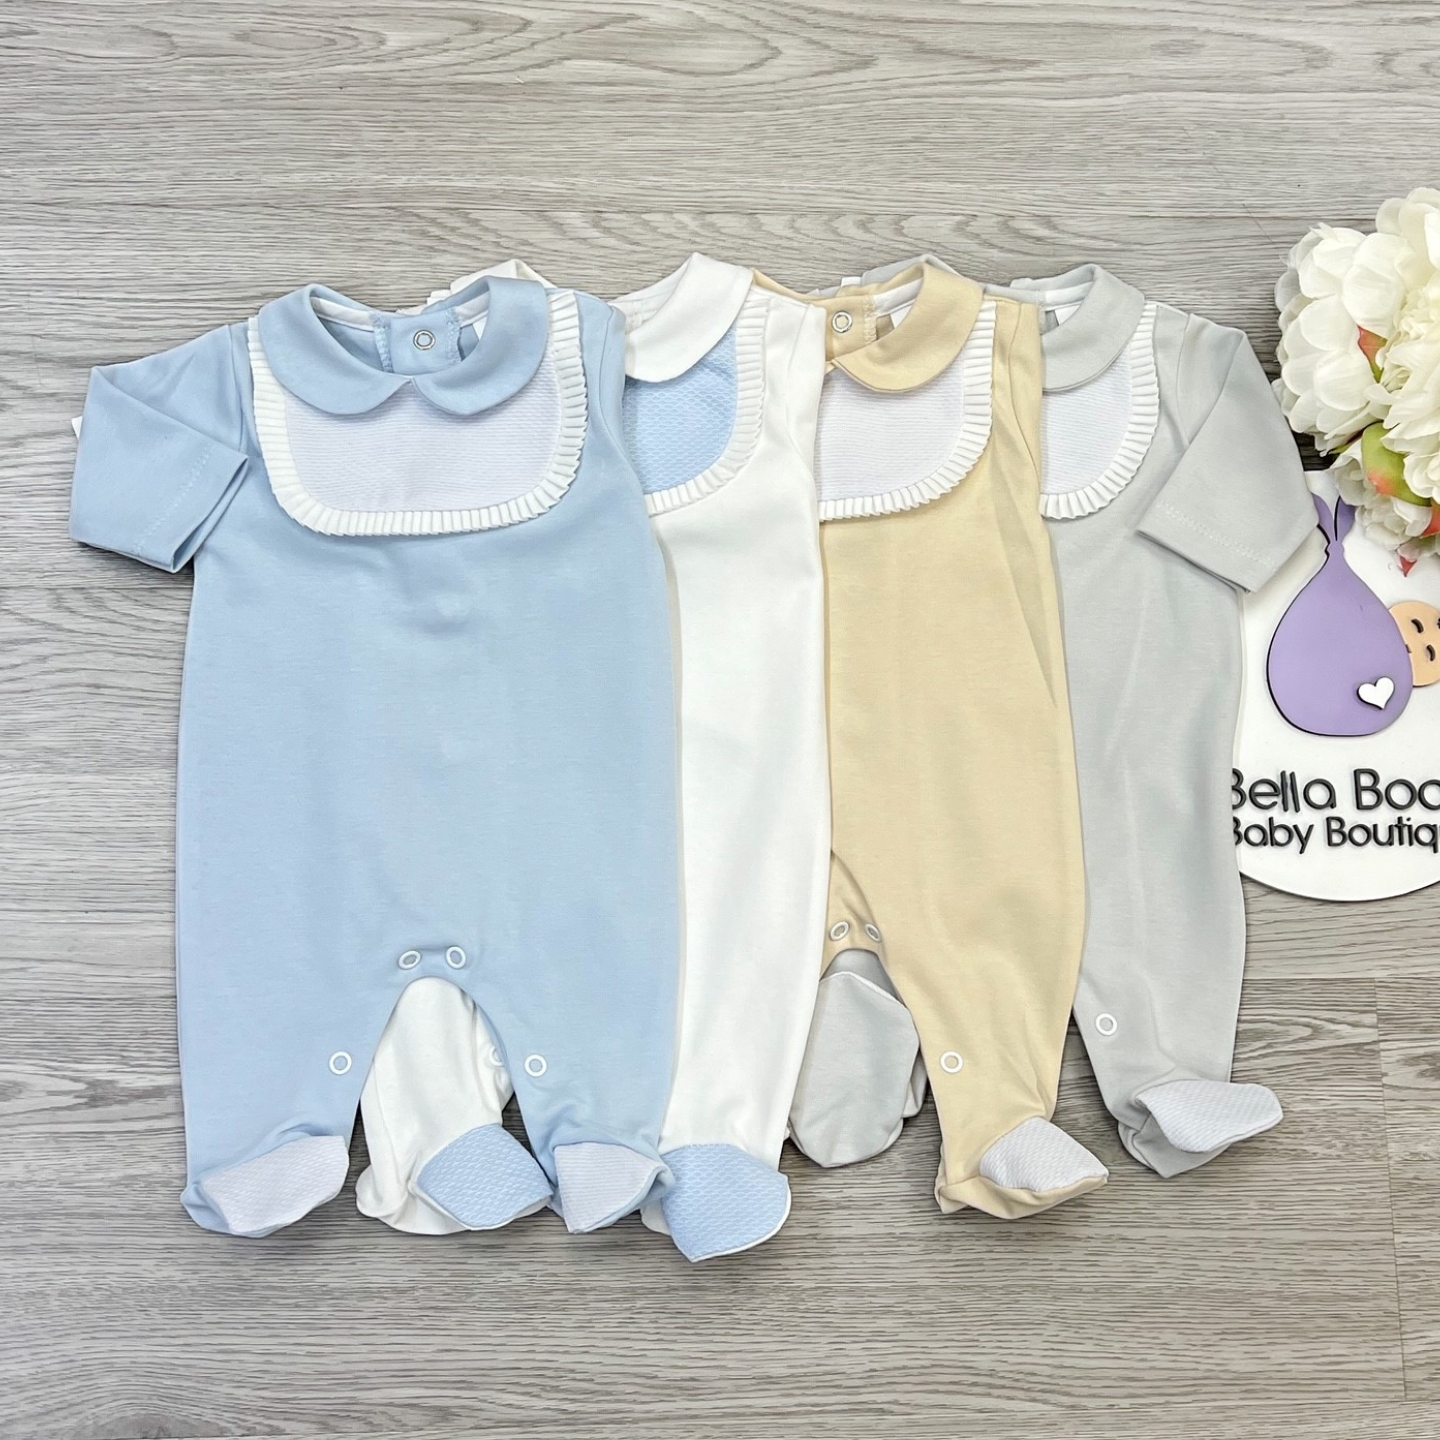 Baby Boys White/Blue Sleepsuit